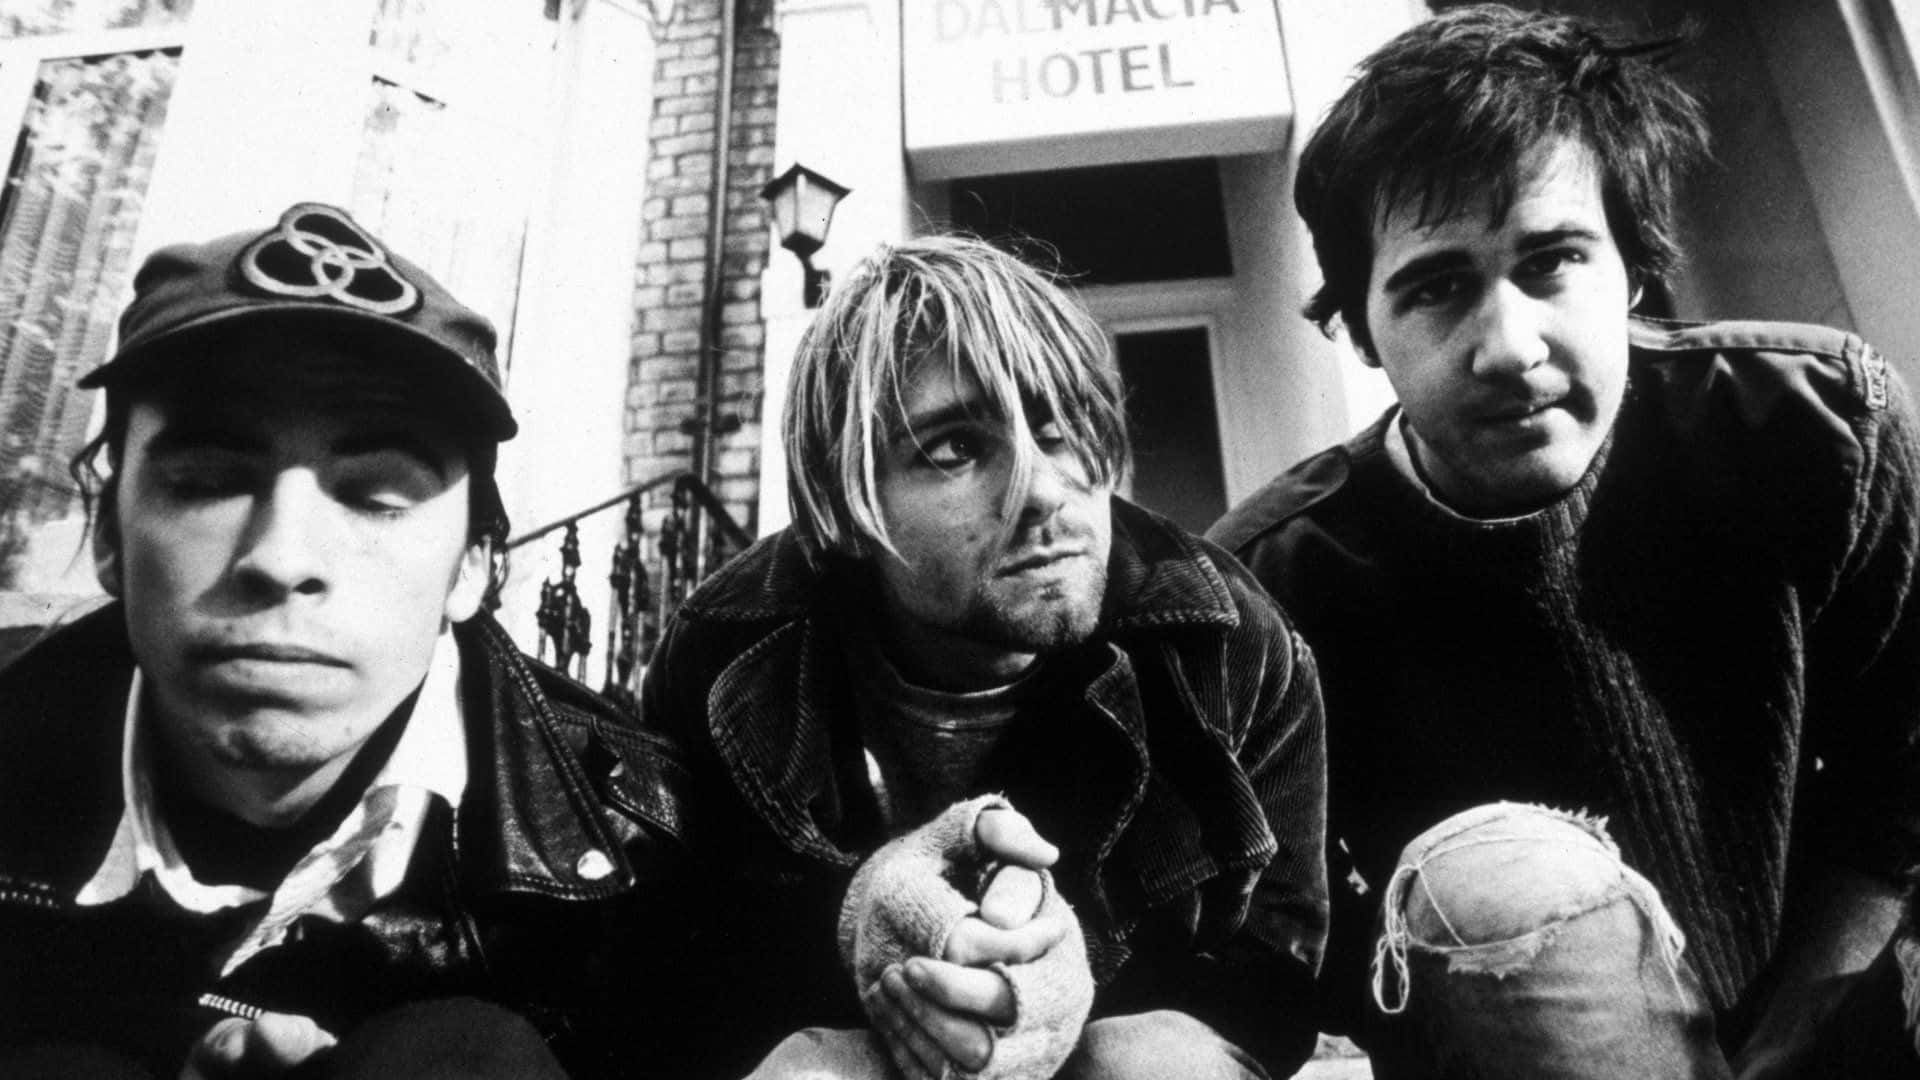 Nirvana Band in a Grunge-Inspired Design